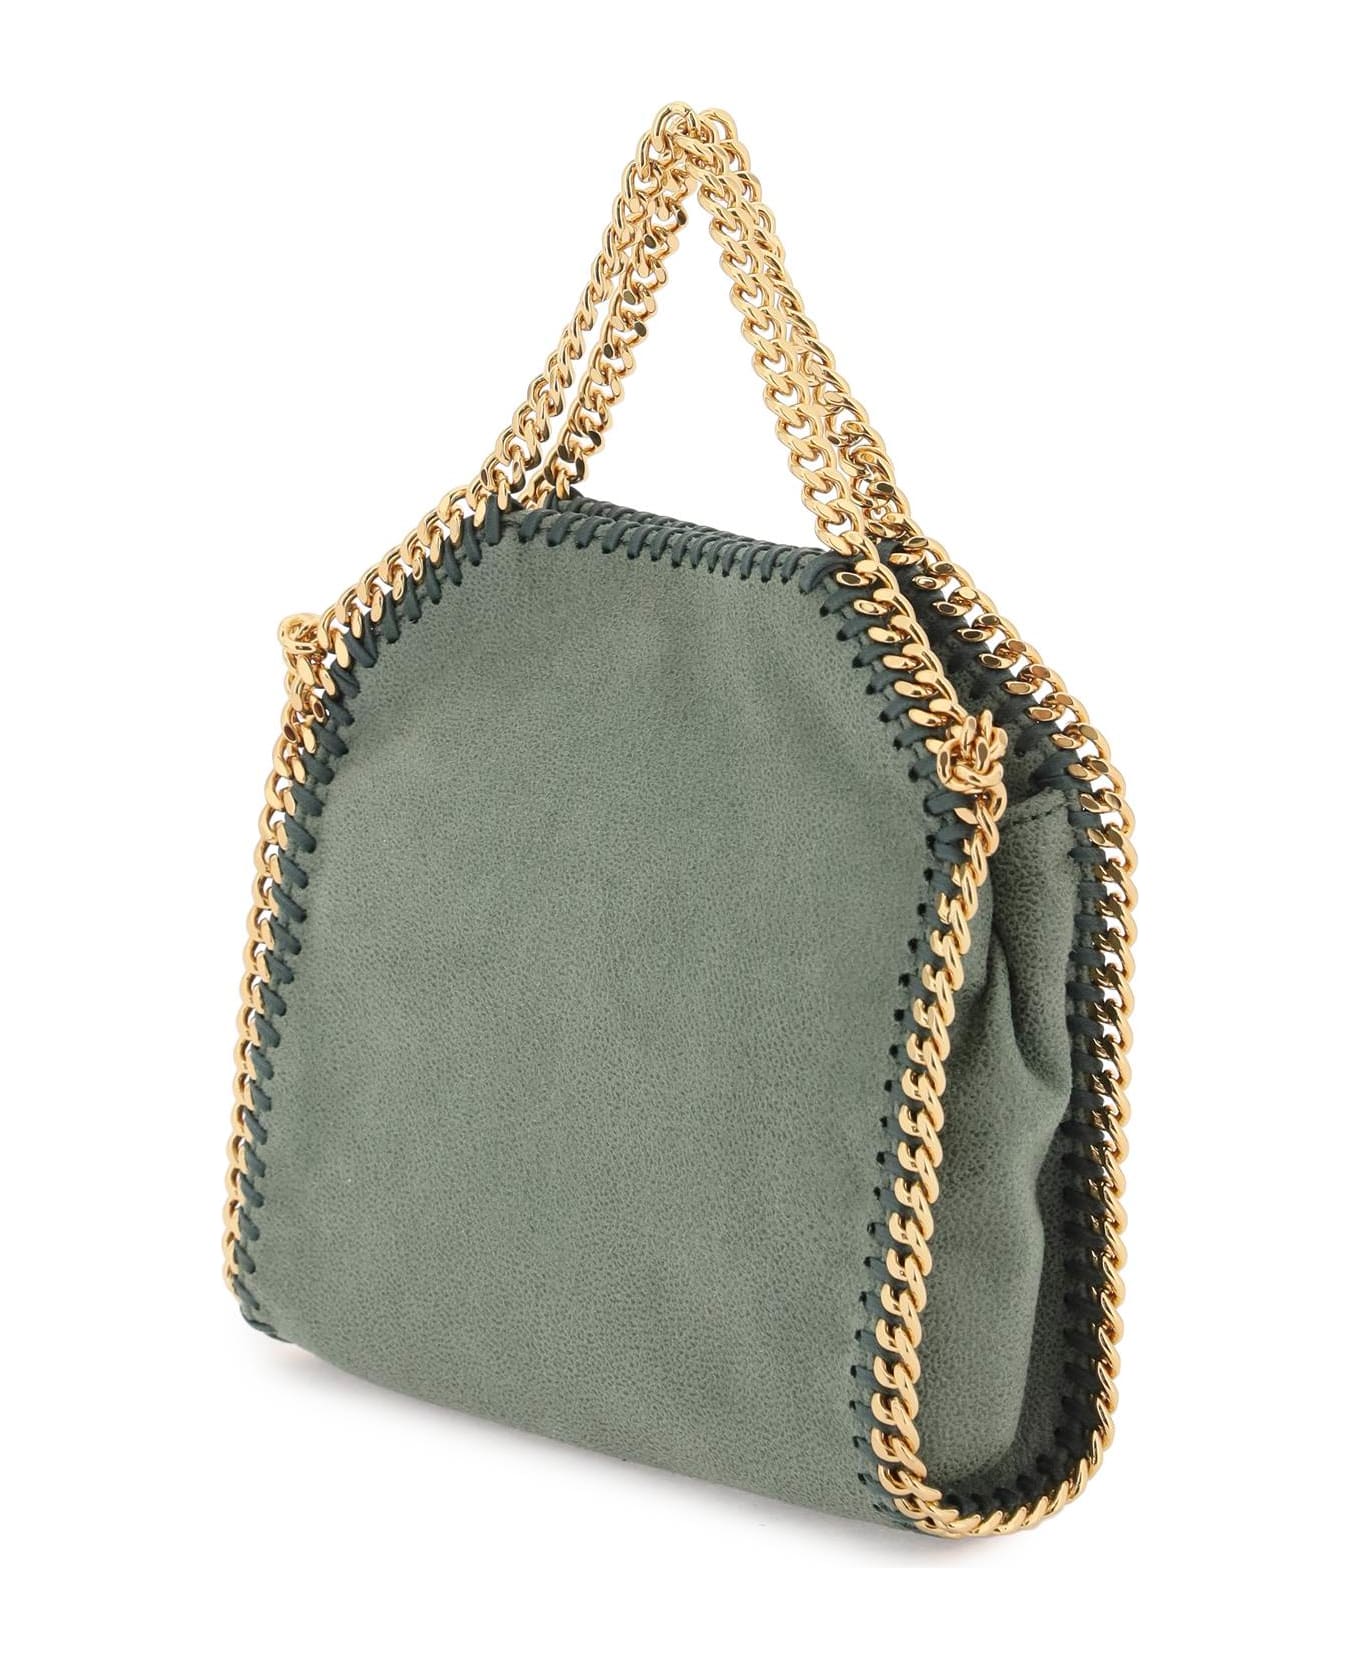 Stella McCartney Falabella Handbag - Stone Green